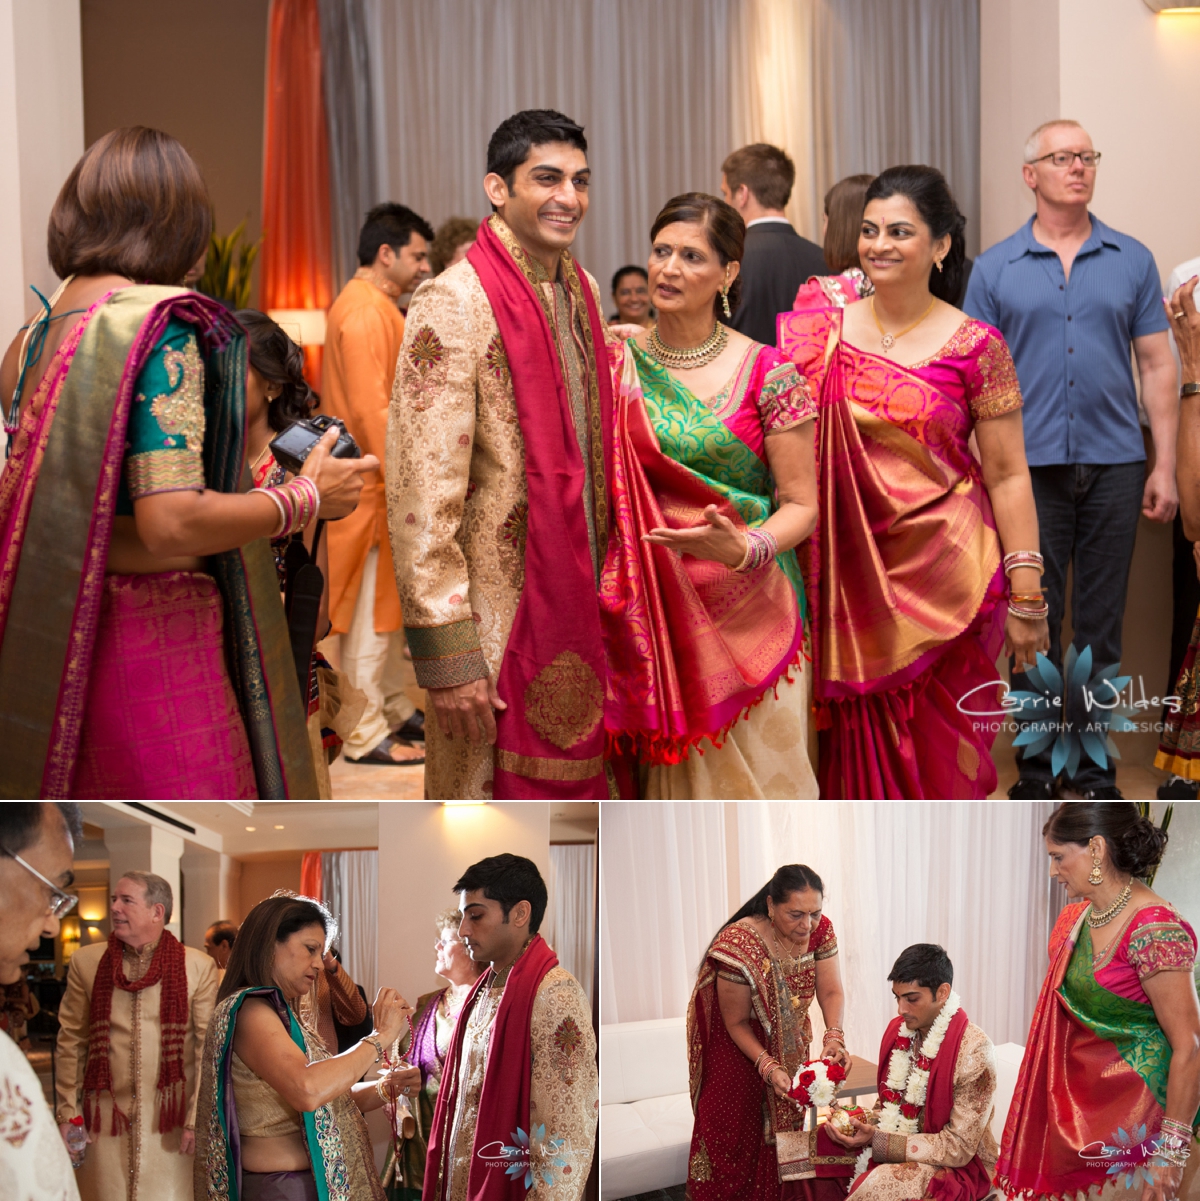 8_17_13 Grand Hyatt Tampa Bay Indian Wedding_0010.jpg